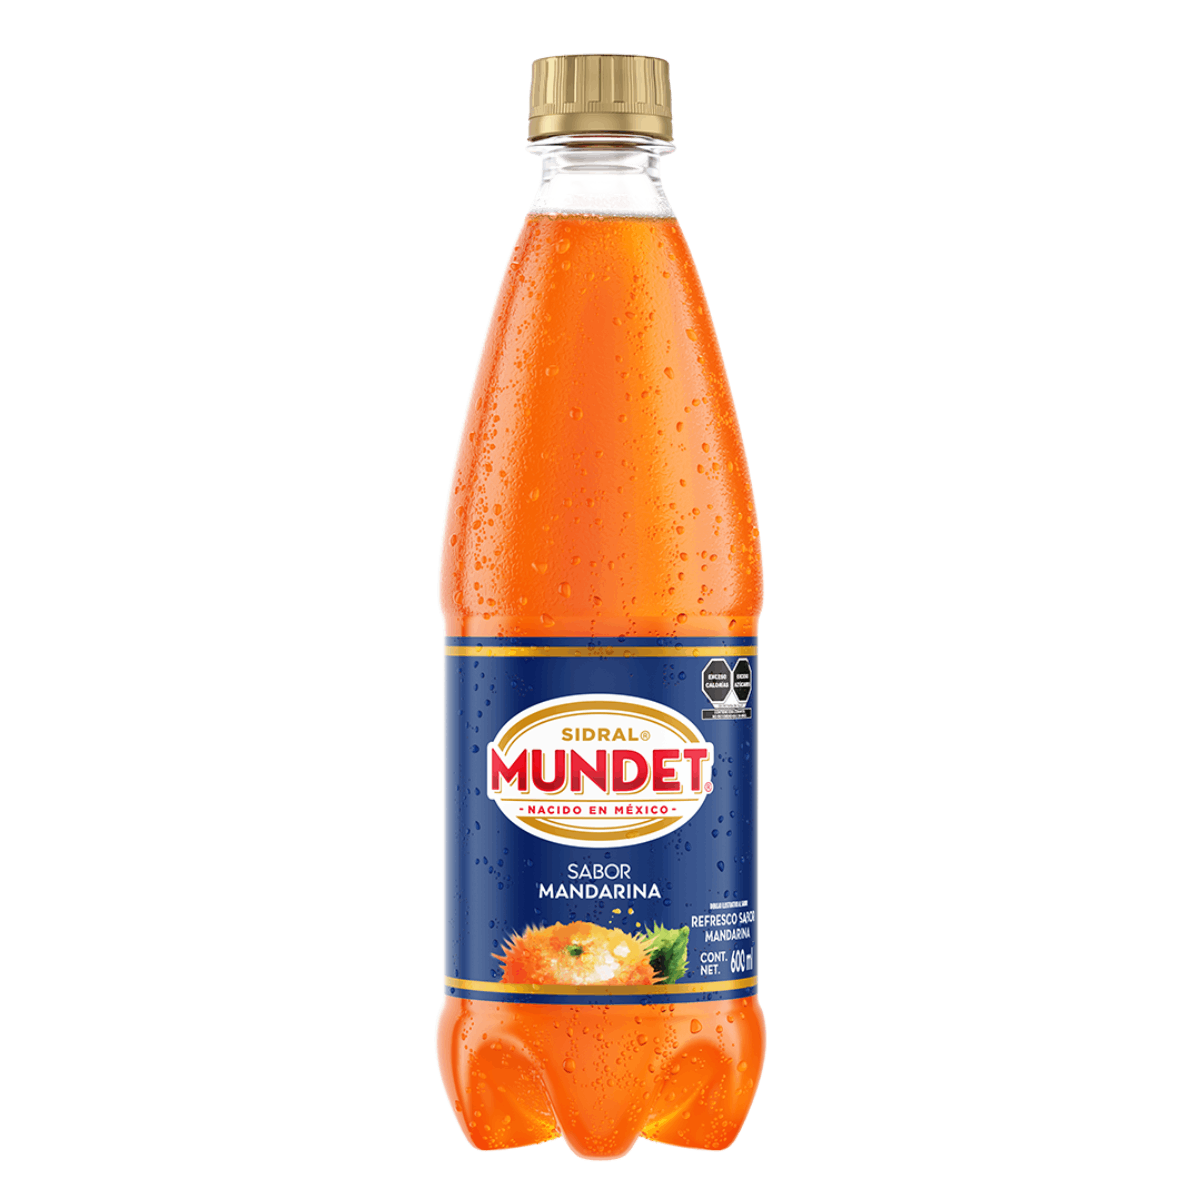 Botella de Sidral Mundet sabor mandarina